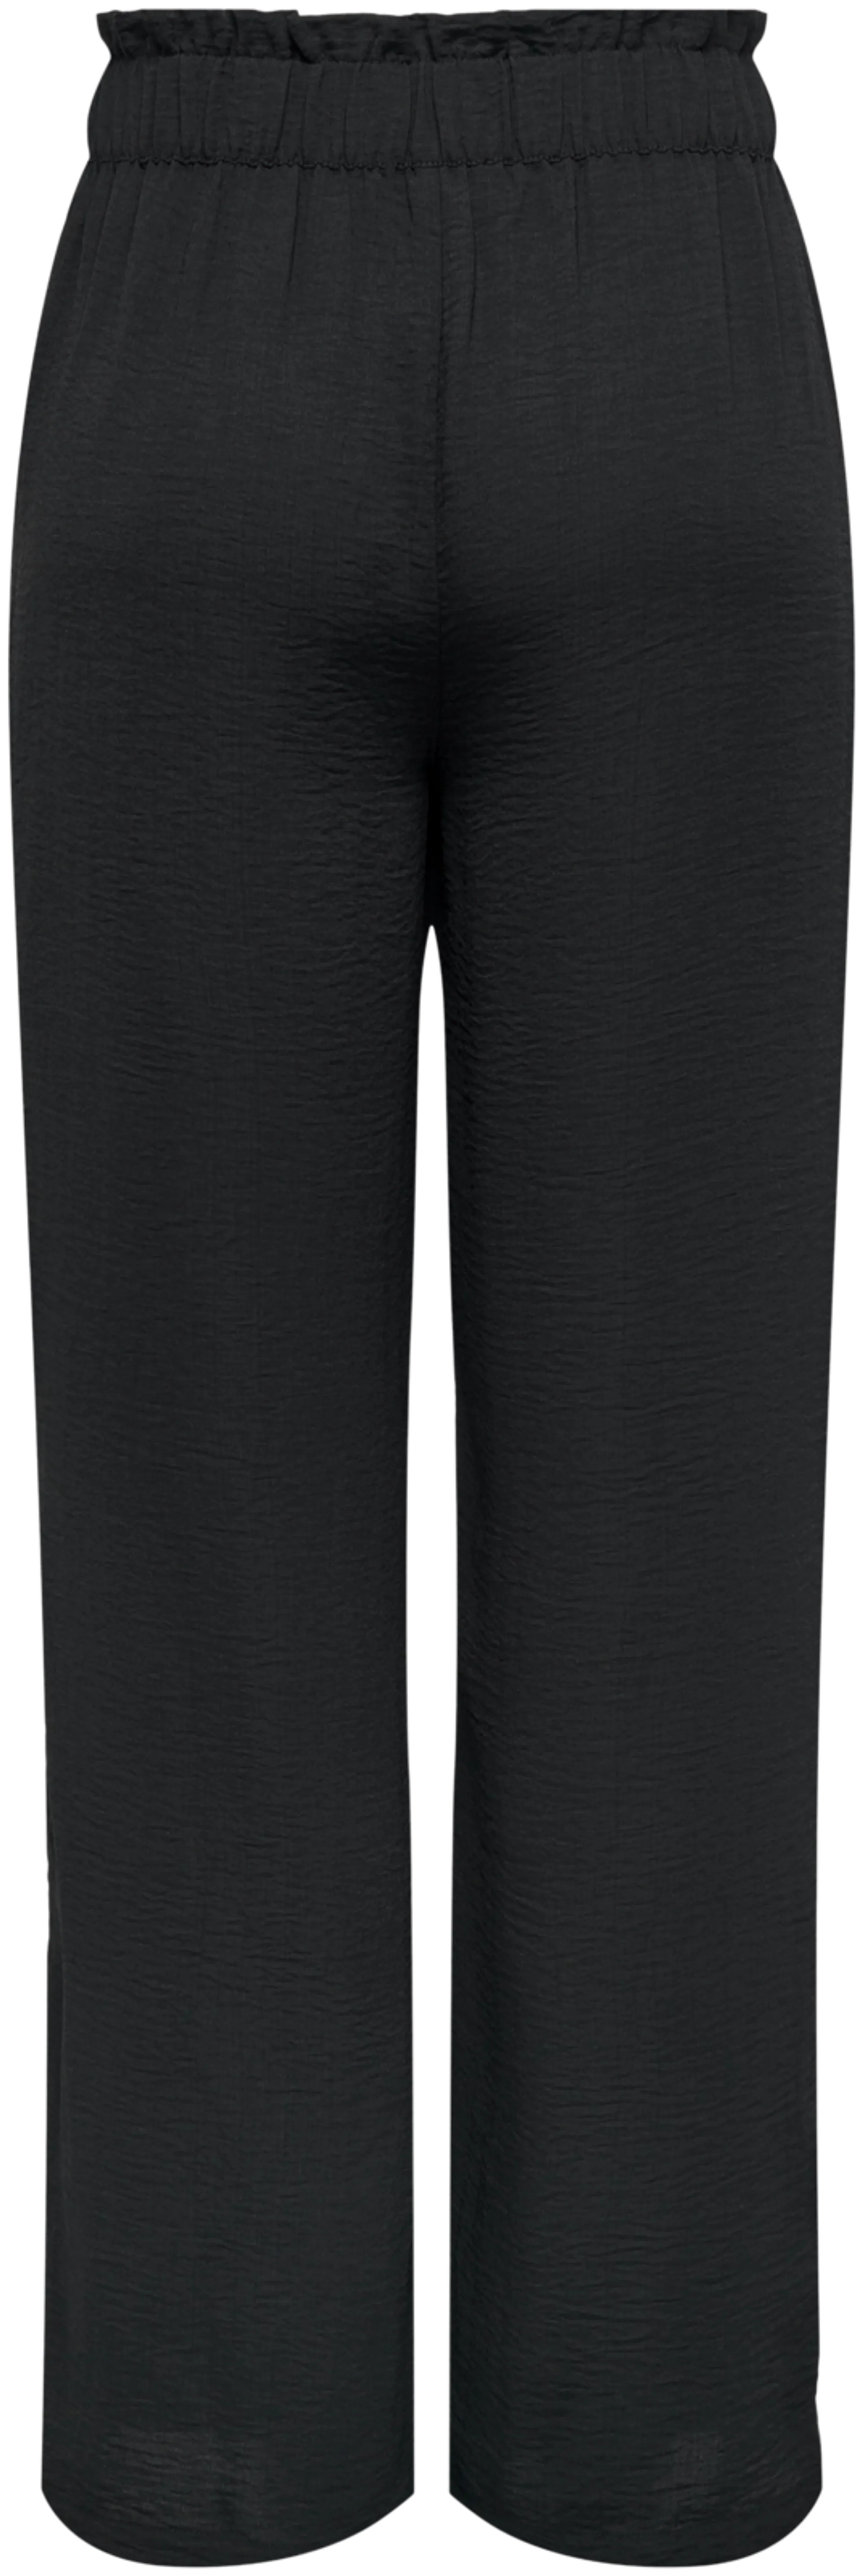 JDY naisten housut Divya - BLACK - 2